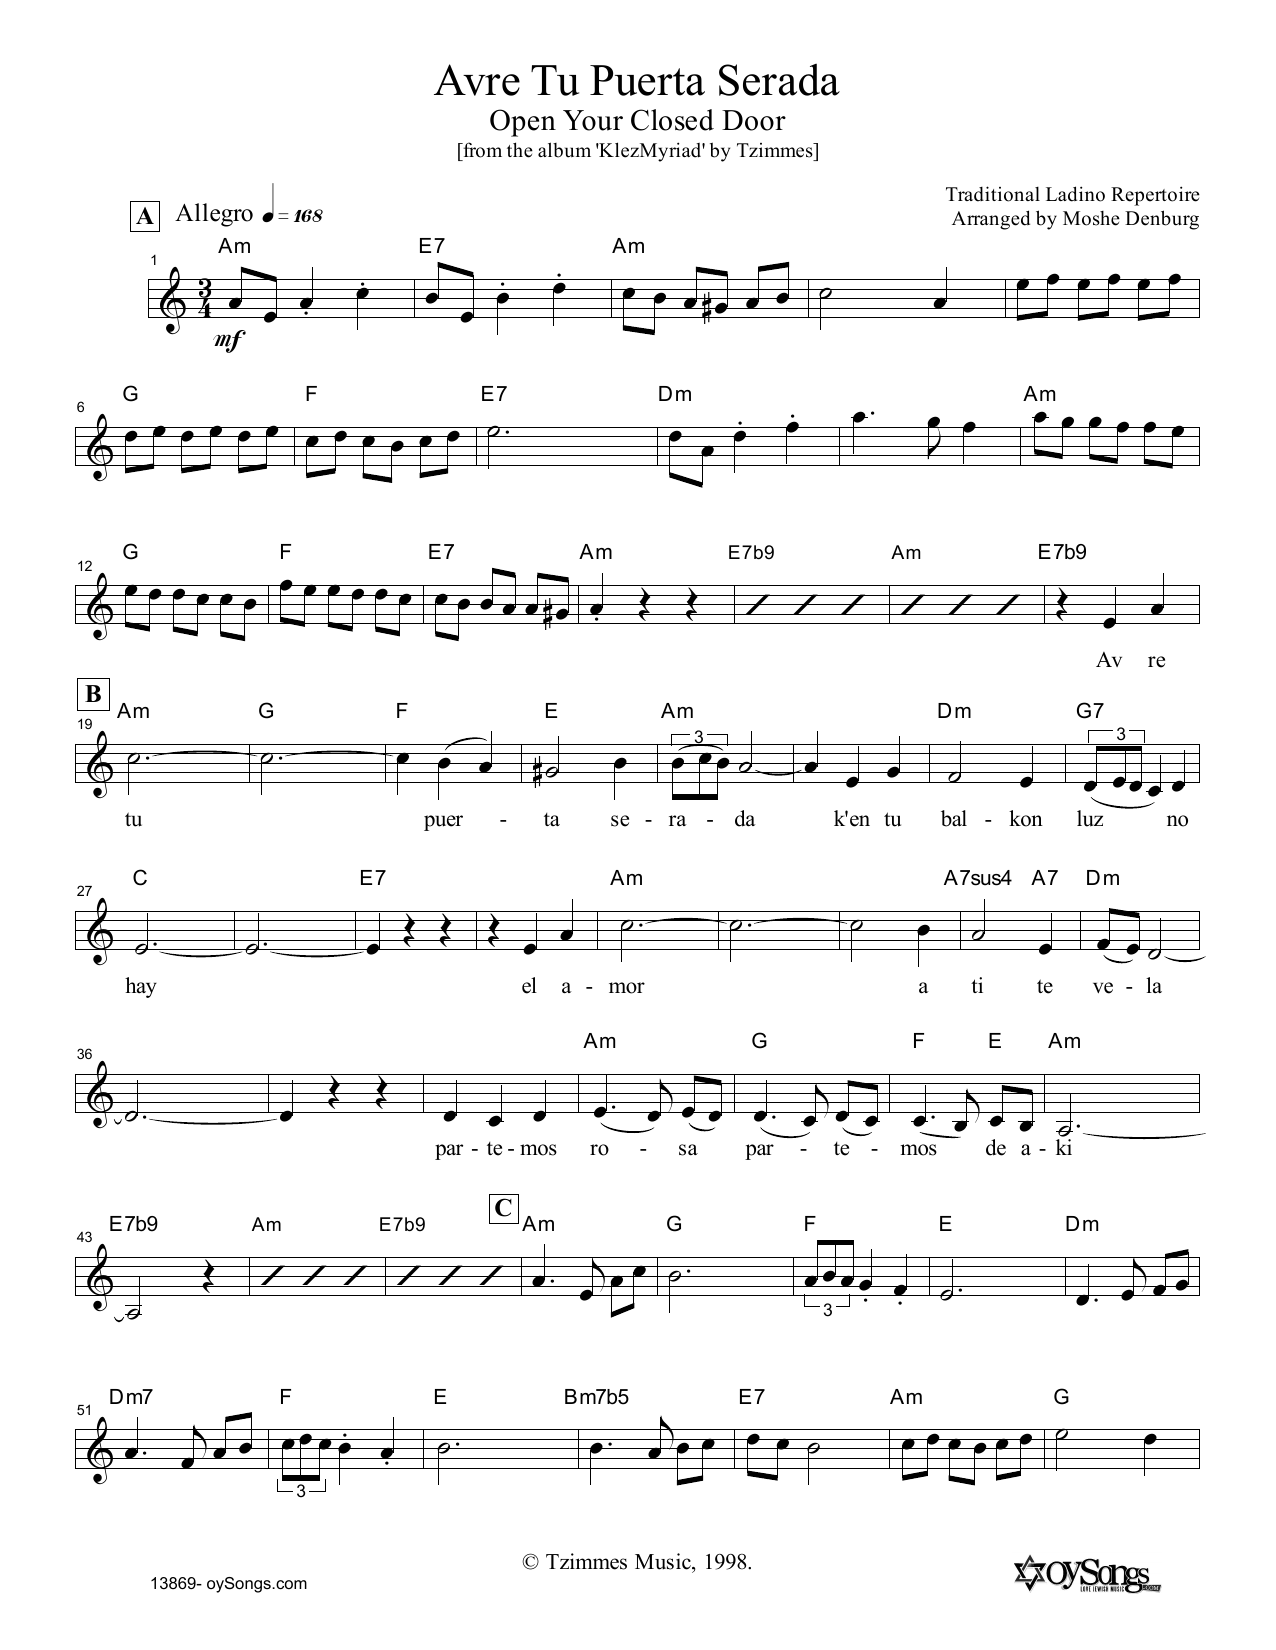 Download Moshe Denburg Avre Tu Puerta Serada Sheet Music and learn how to play Melody Line, Lyrics & Chords PDF digital score in minutes